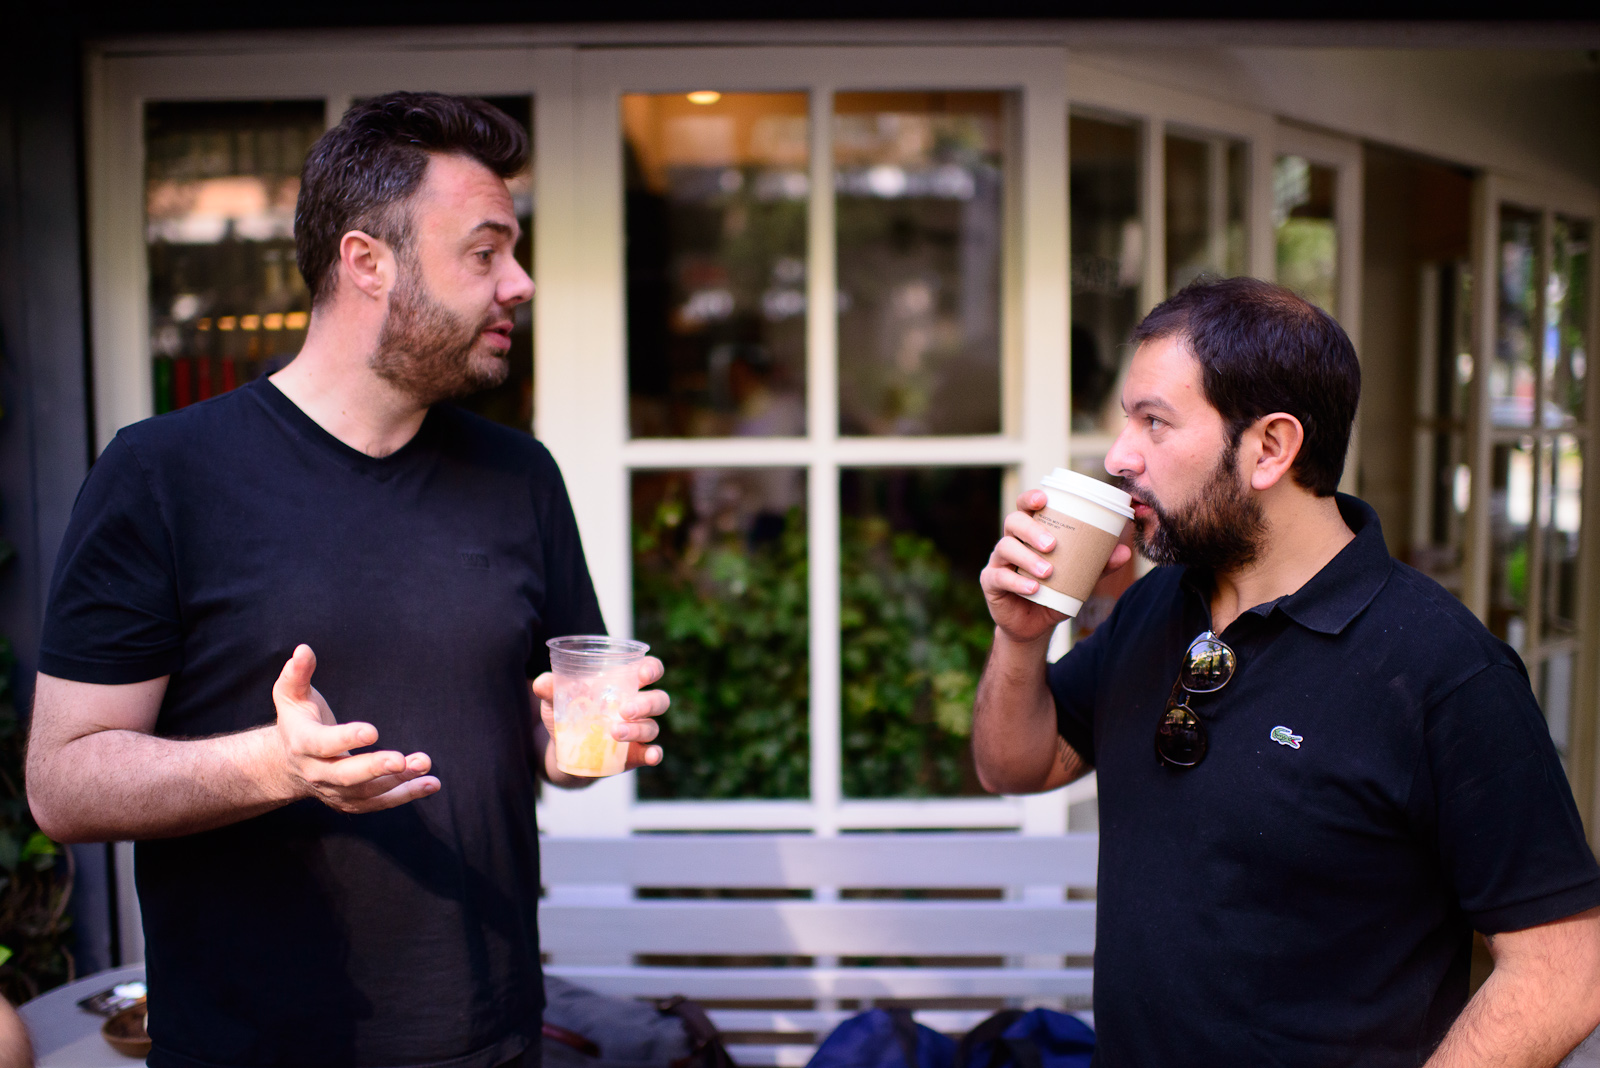 Chefs Bo Bech and Enrique Olvera grabbing coffee outside Eno Pet